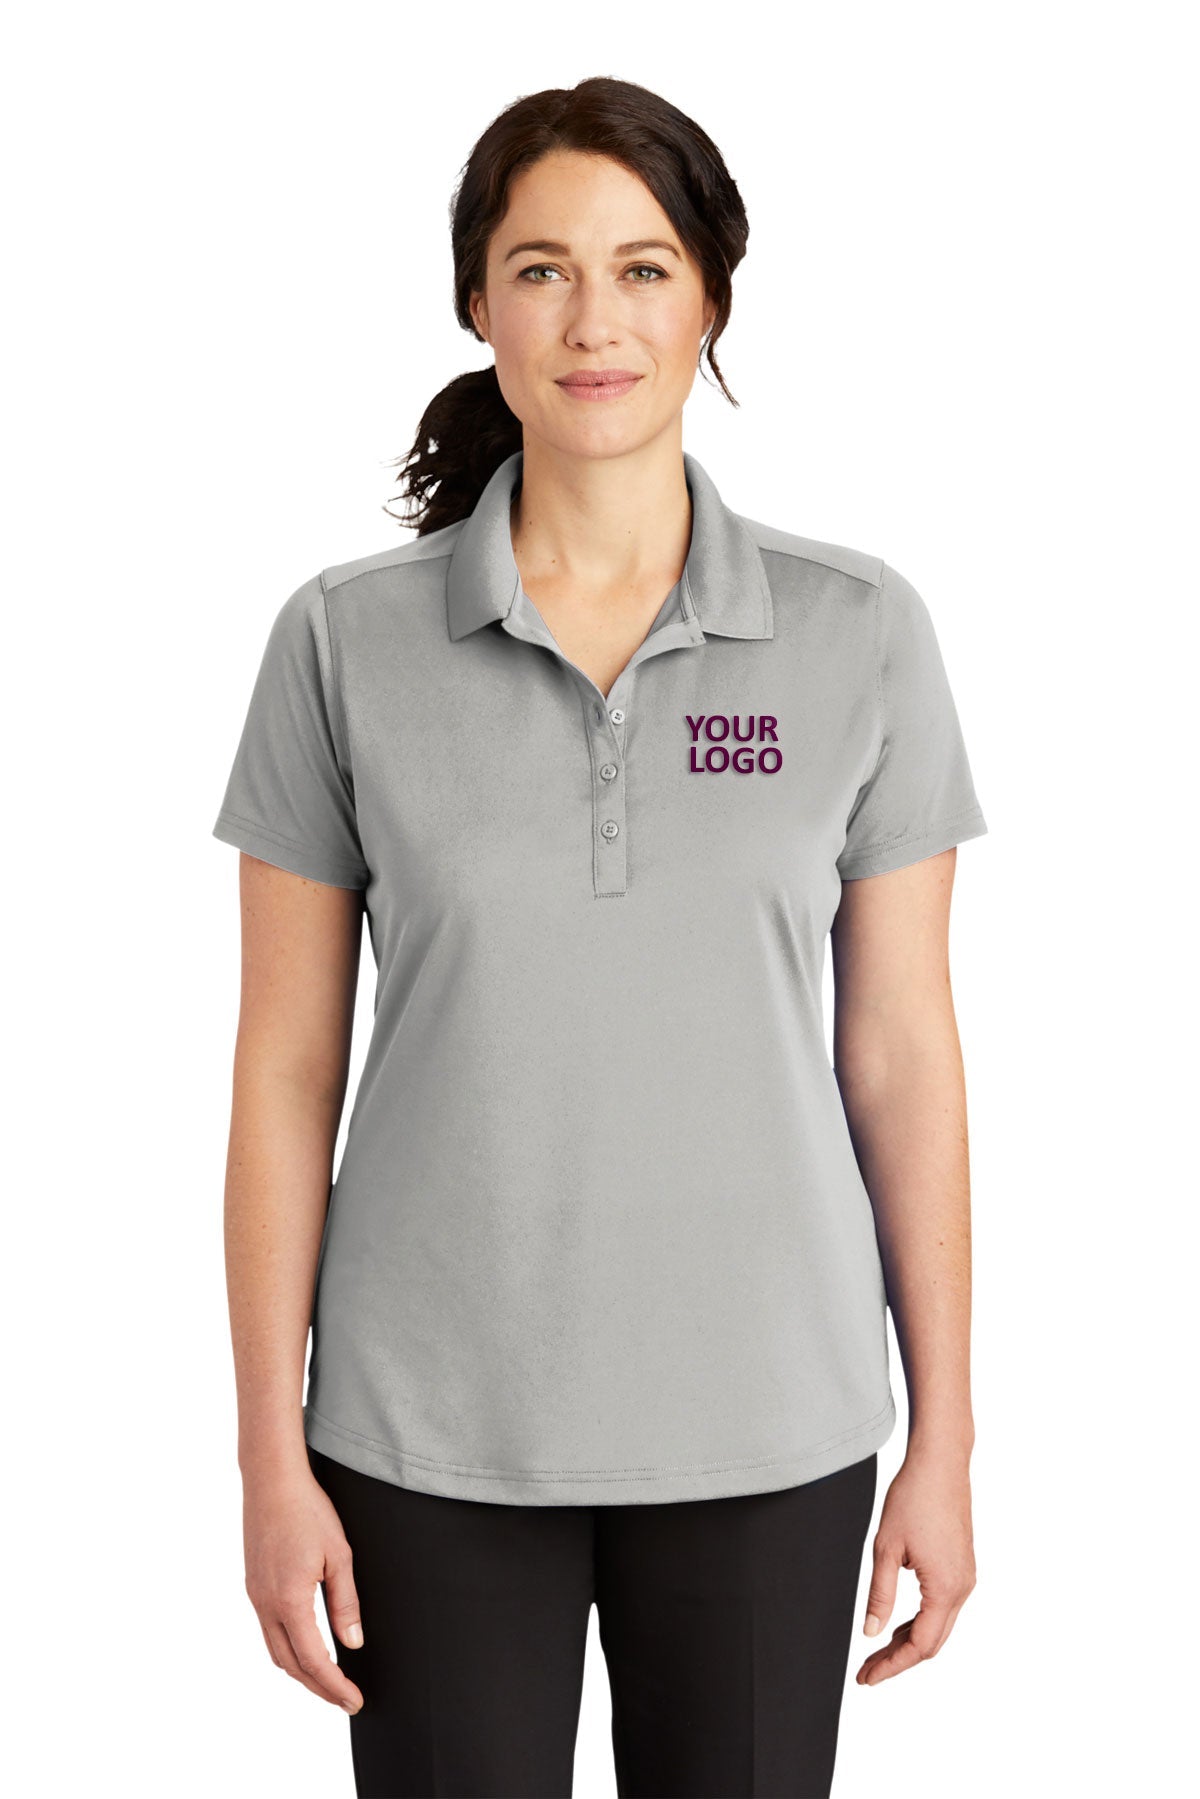 CornerStone Light Grey CS419 polo shirts with company logo